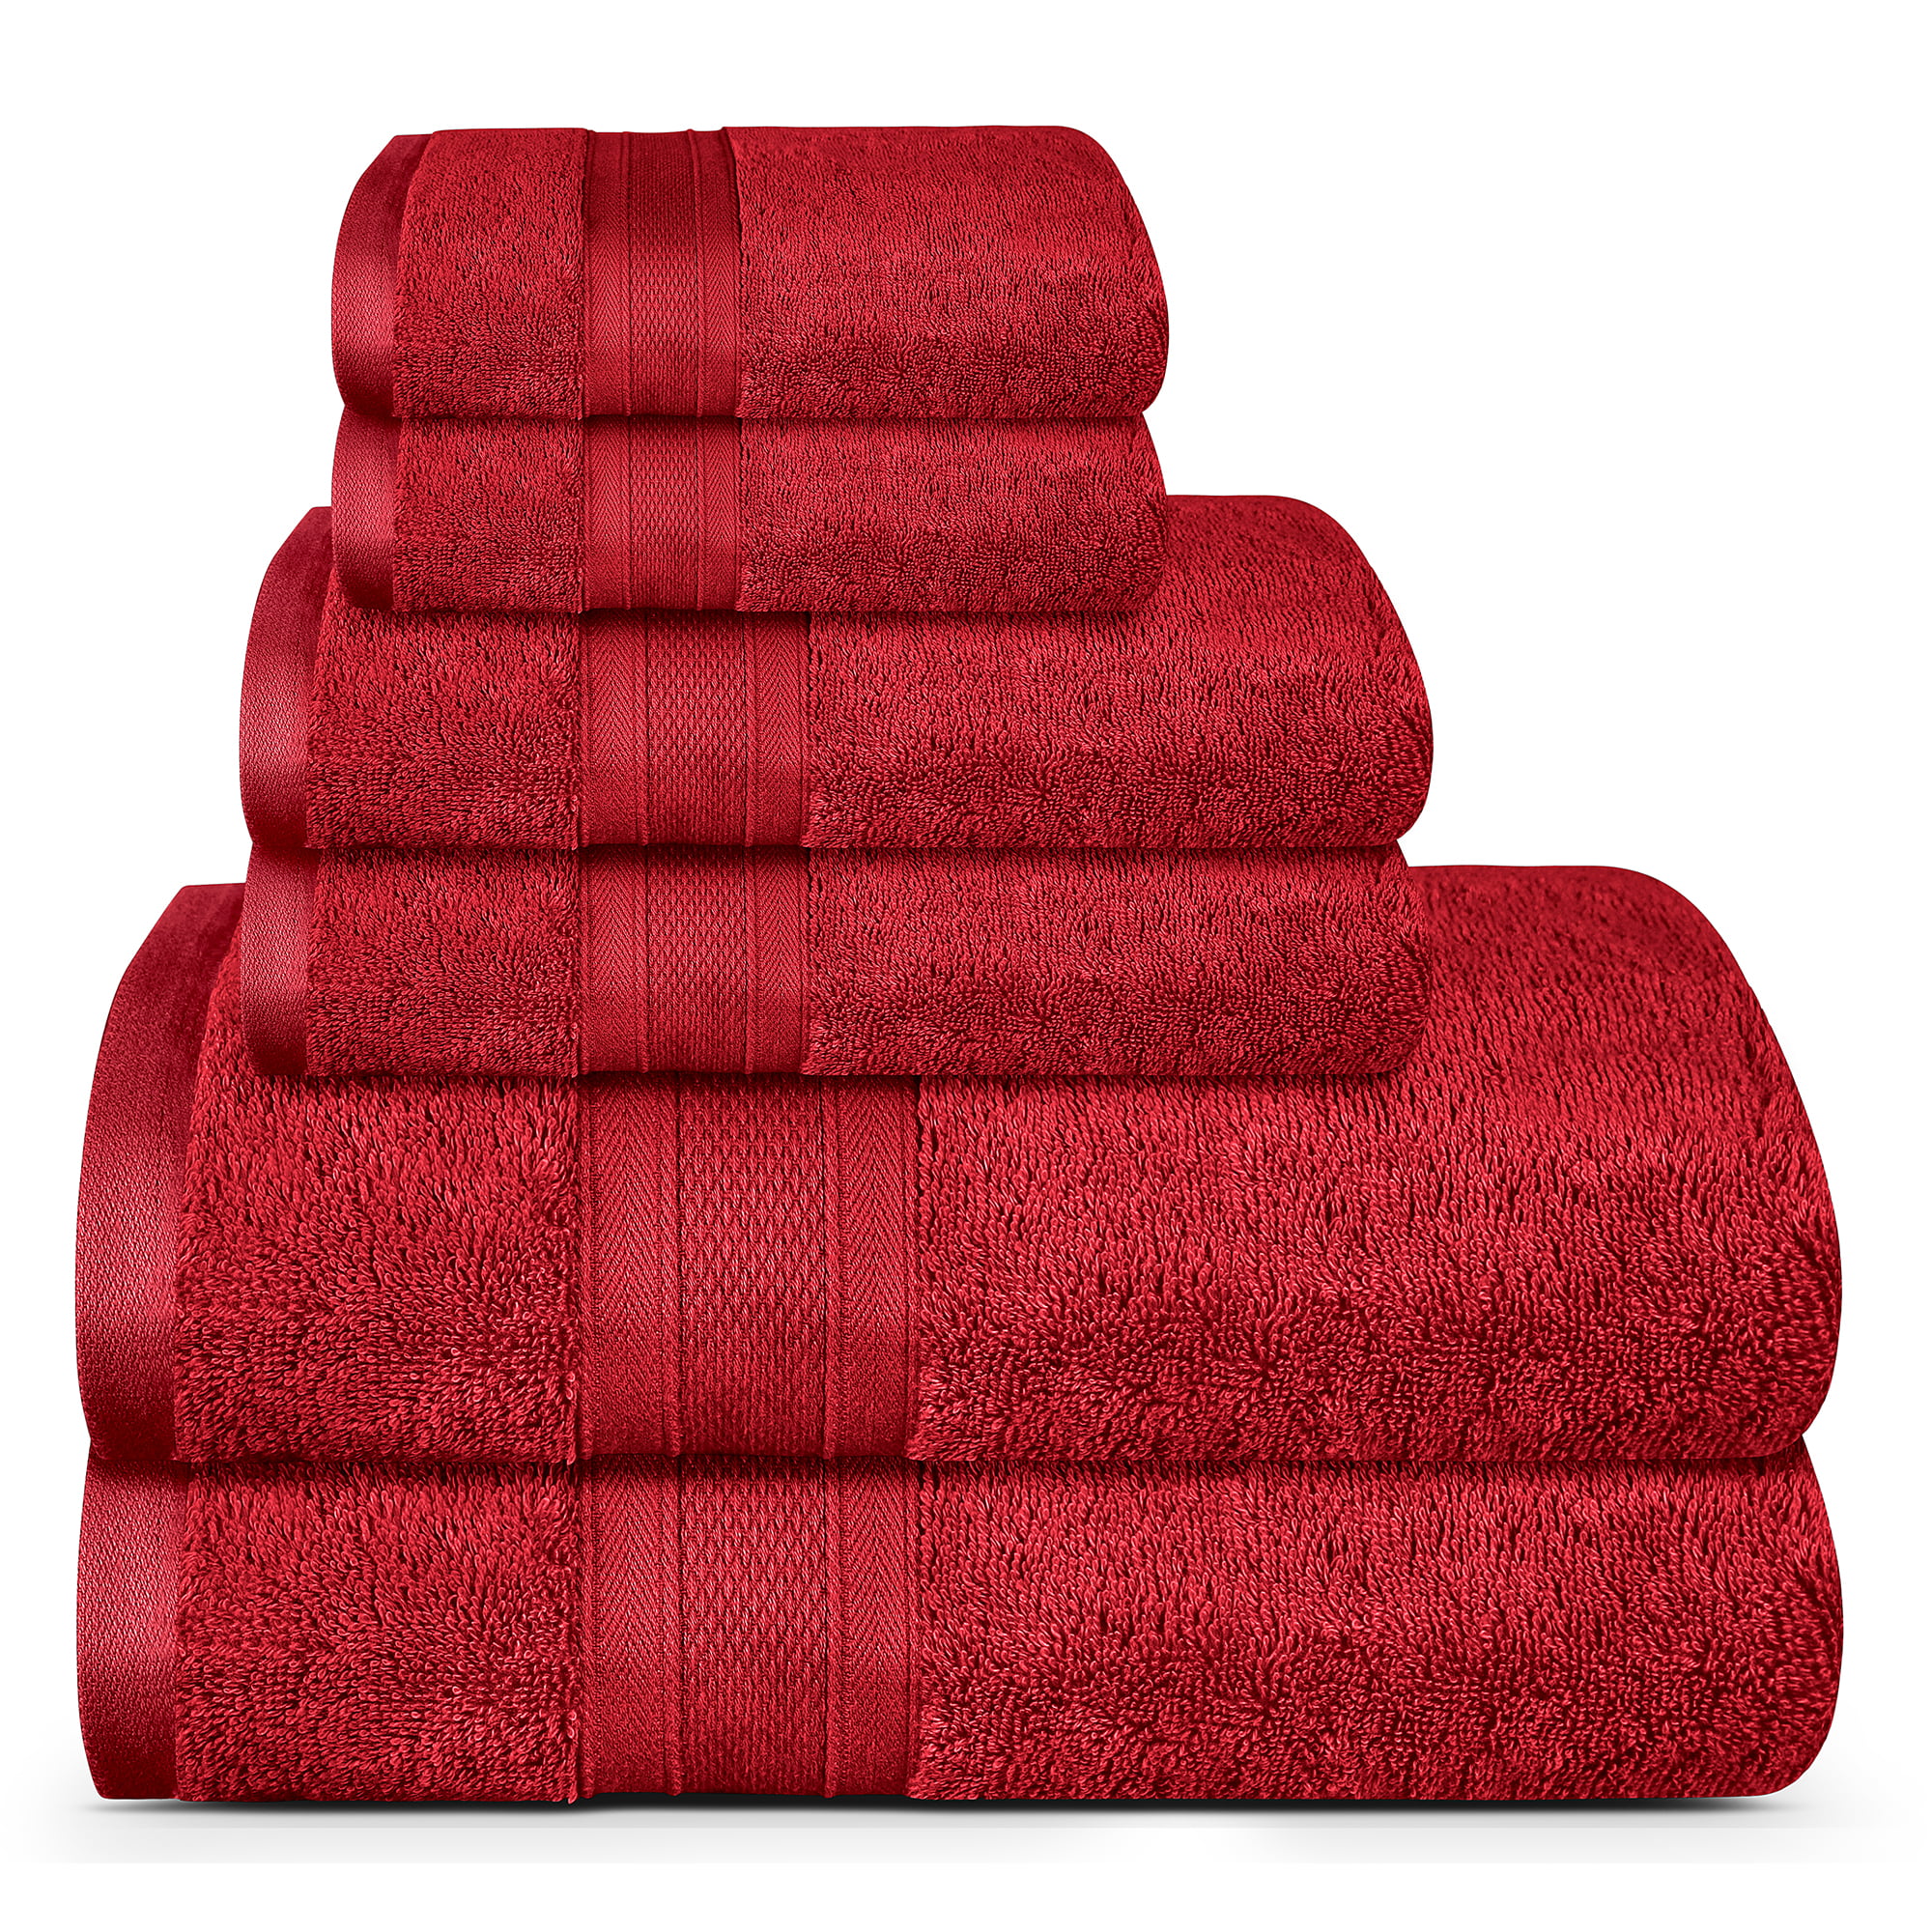 Wehilion Bath Towels set,3 Piece Towel Set,Towels set Blue  Grey,Soft,Fluffy,Absorbent ,1 Bath Towel,1 Hand Towel ,1 Wash Towel - 100%  Combed Cotton